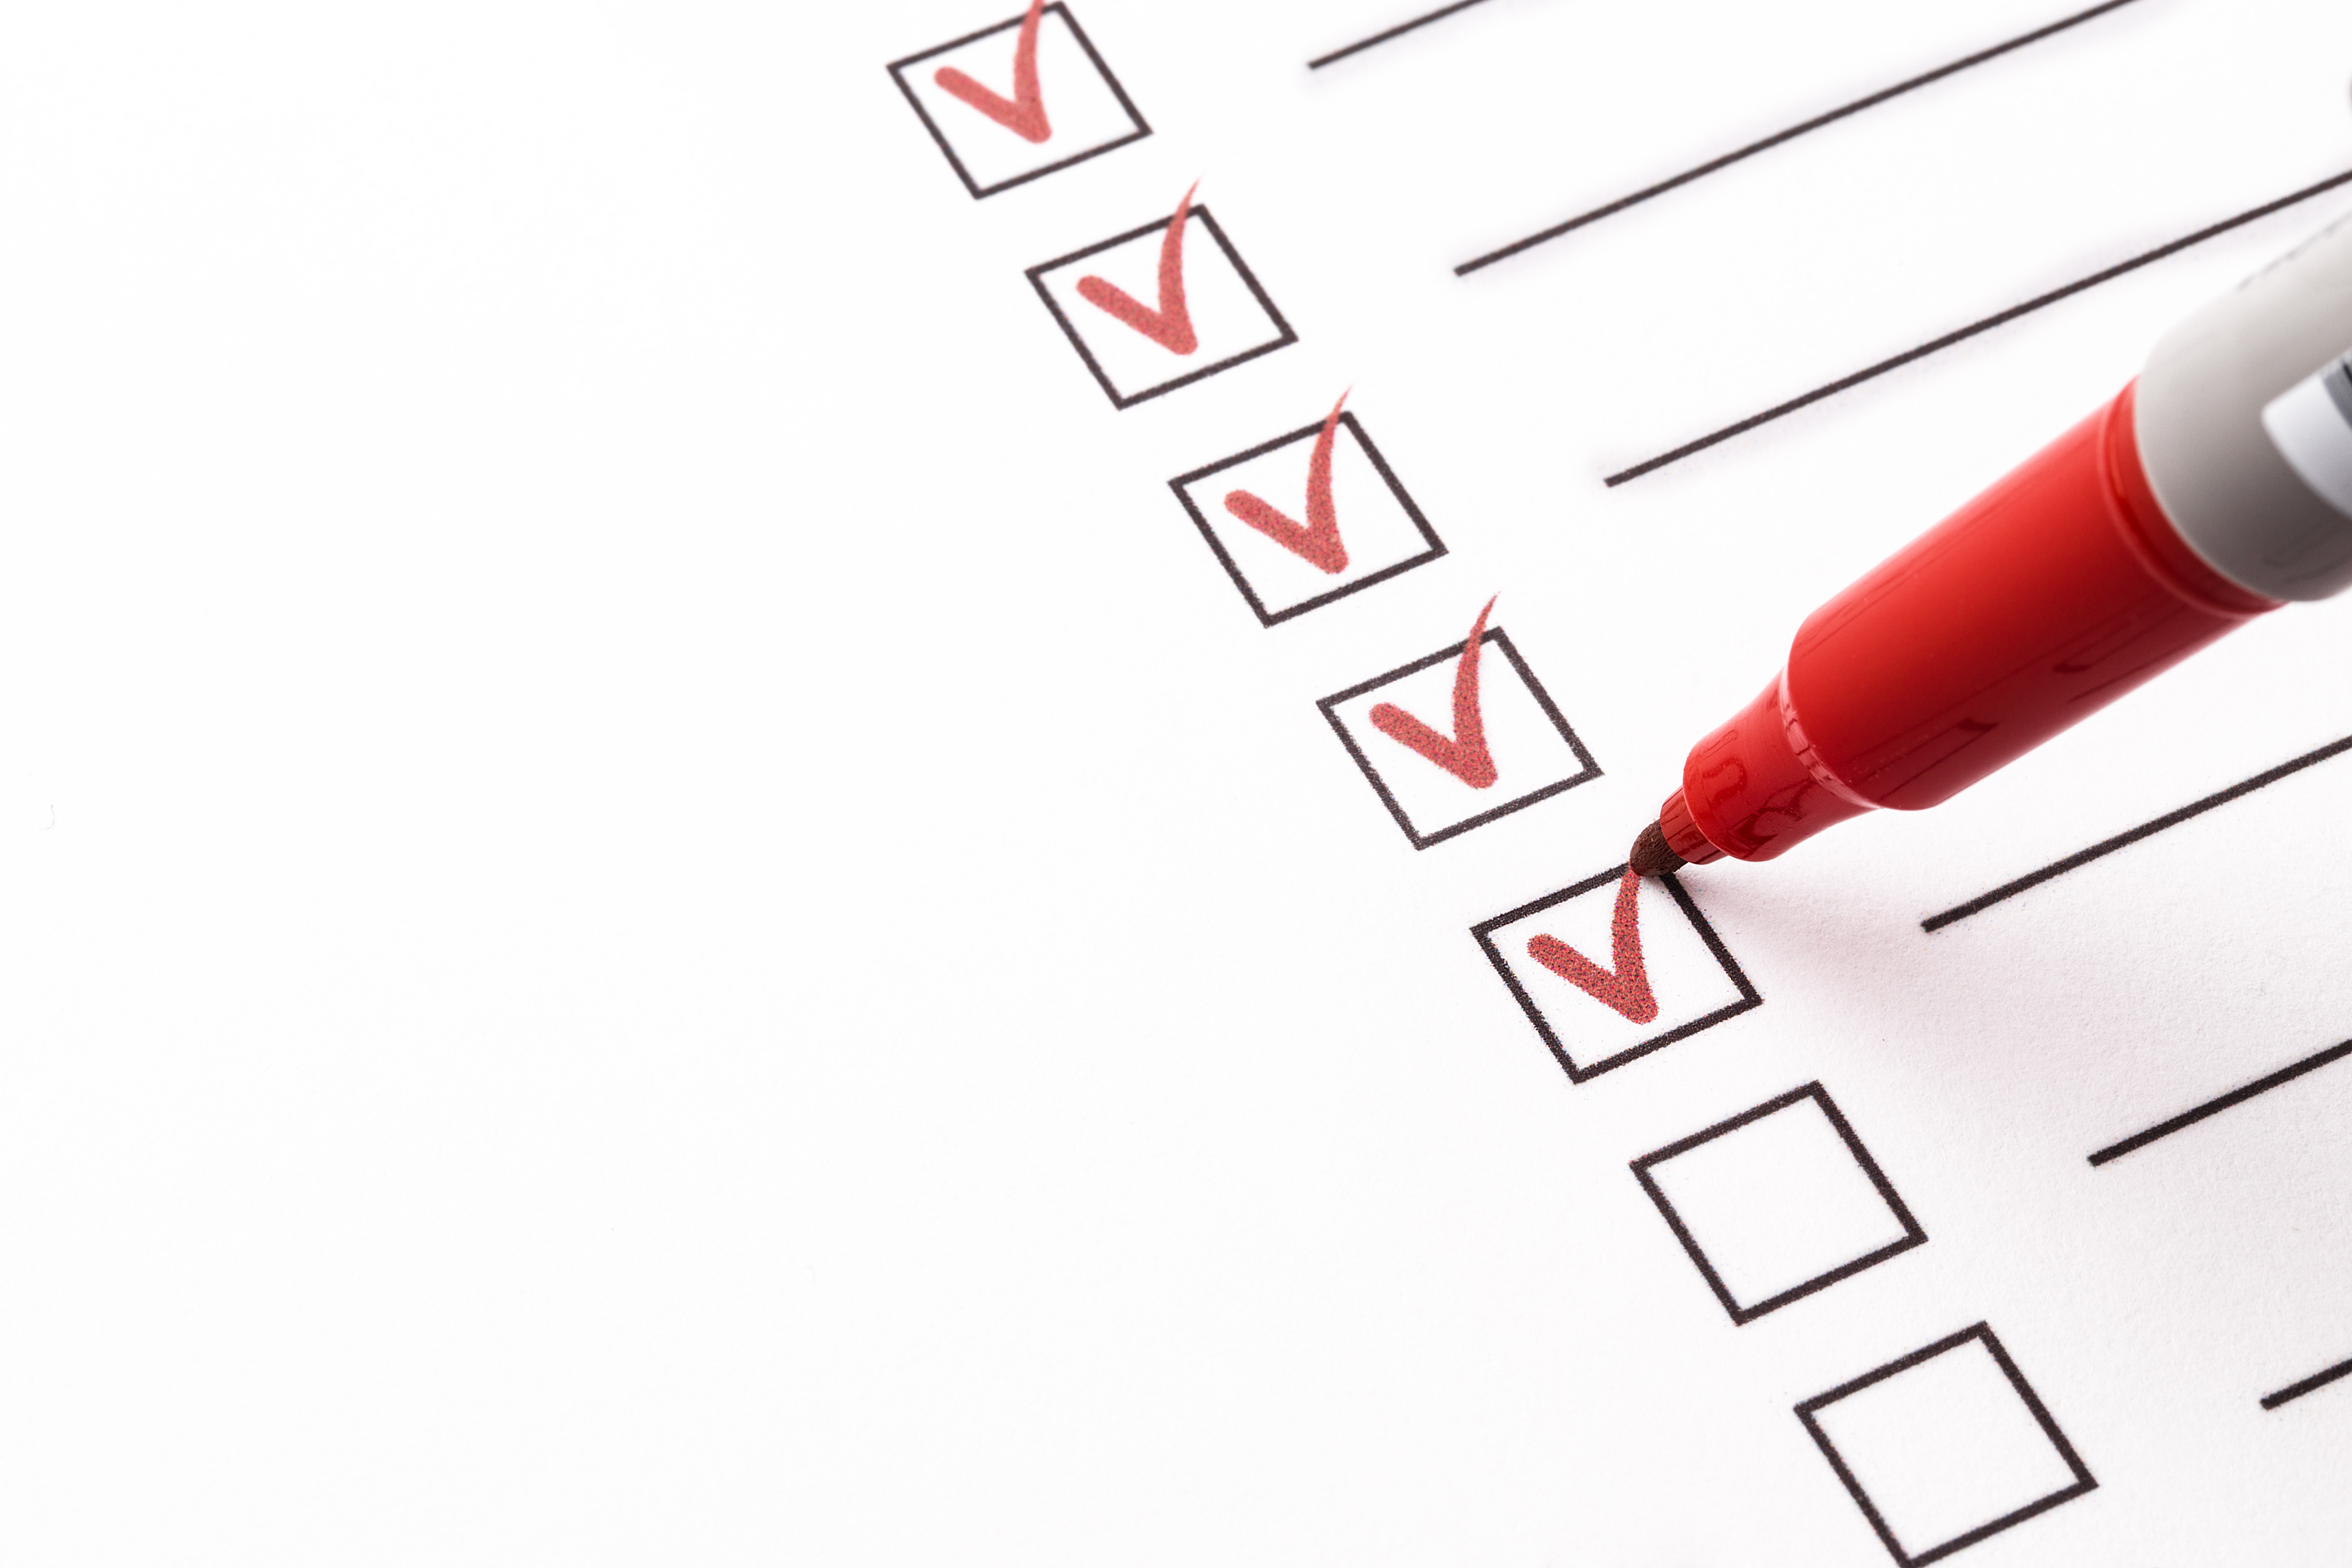 Credit union exam checklist from redboard